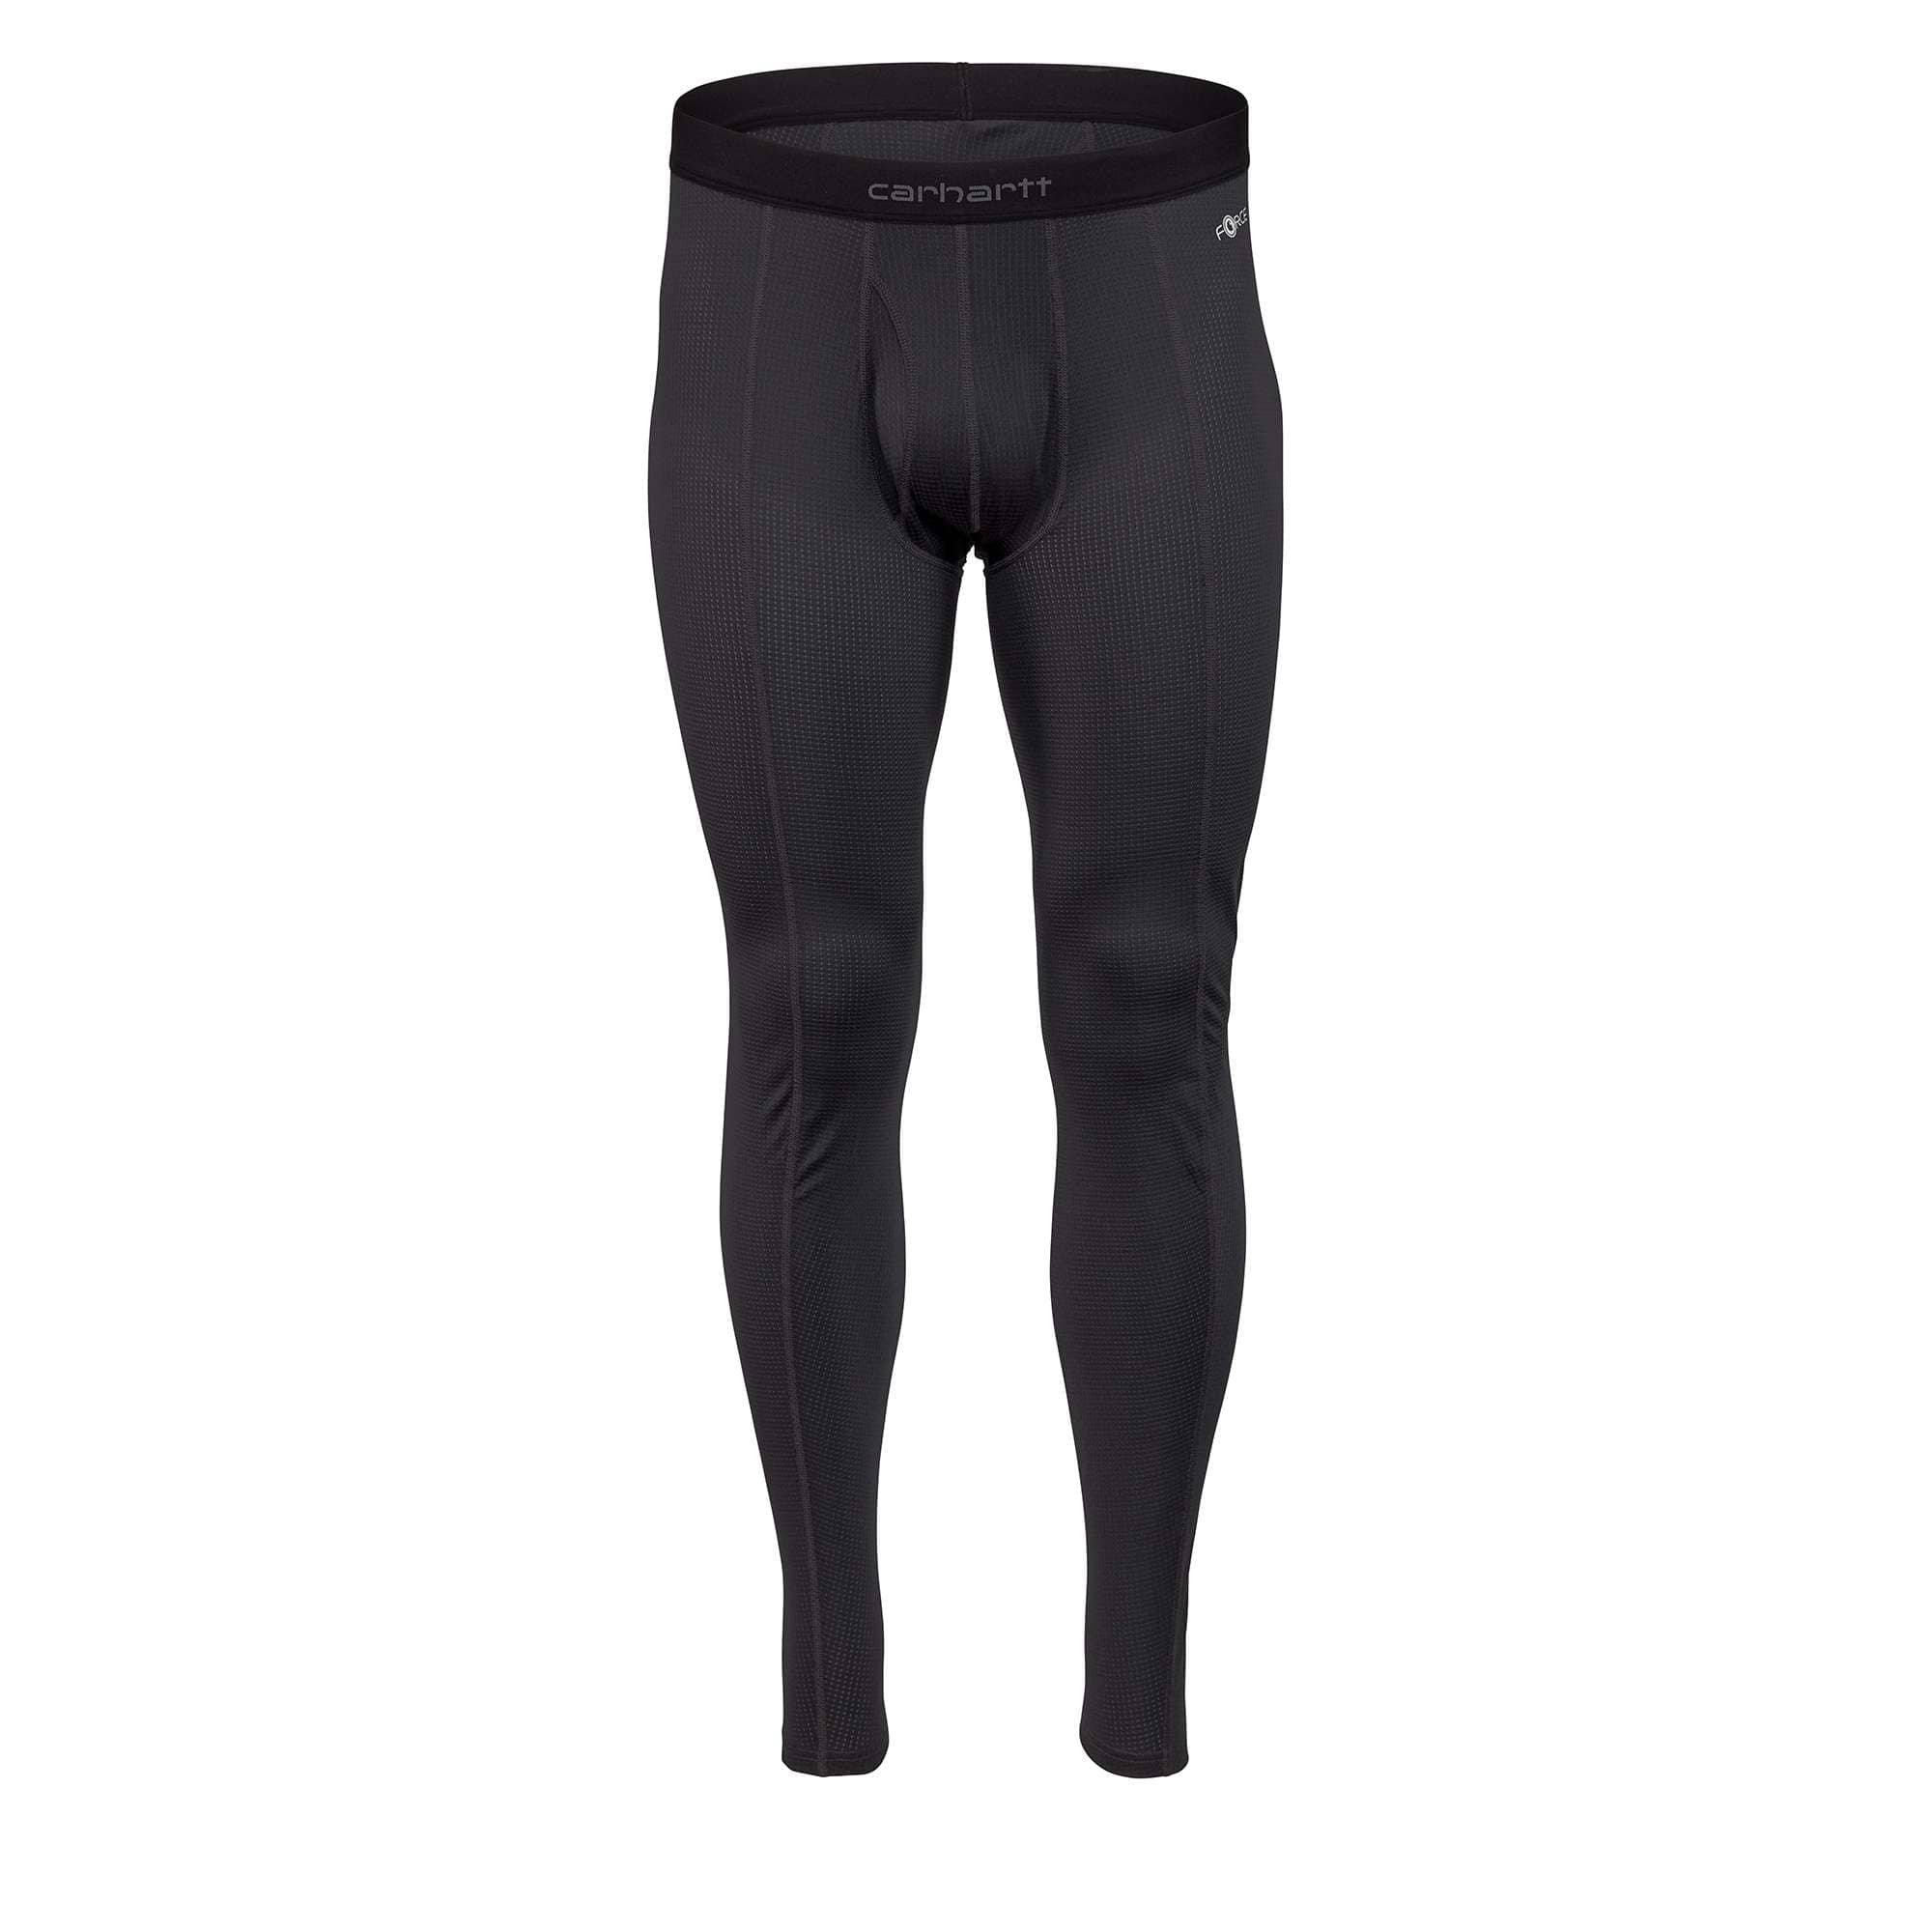 Carhartt, Underwear & Socks, Carhartt Force Base Layer Pants Thermal Long  Johns Black Mens Size Xl